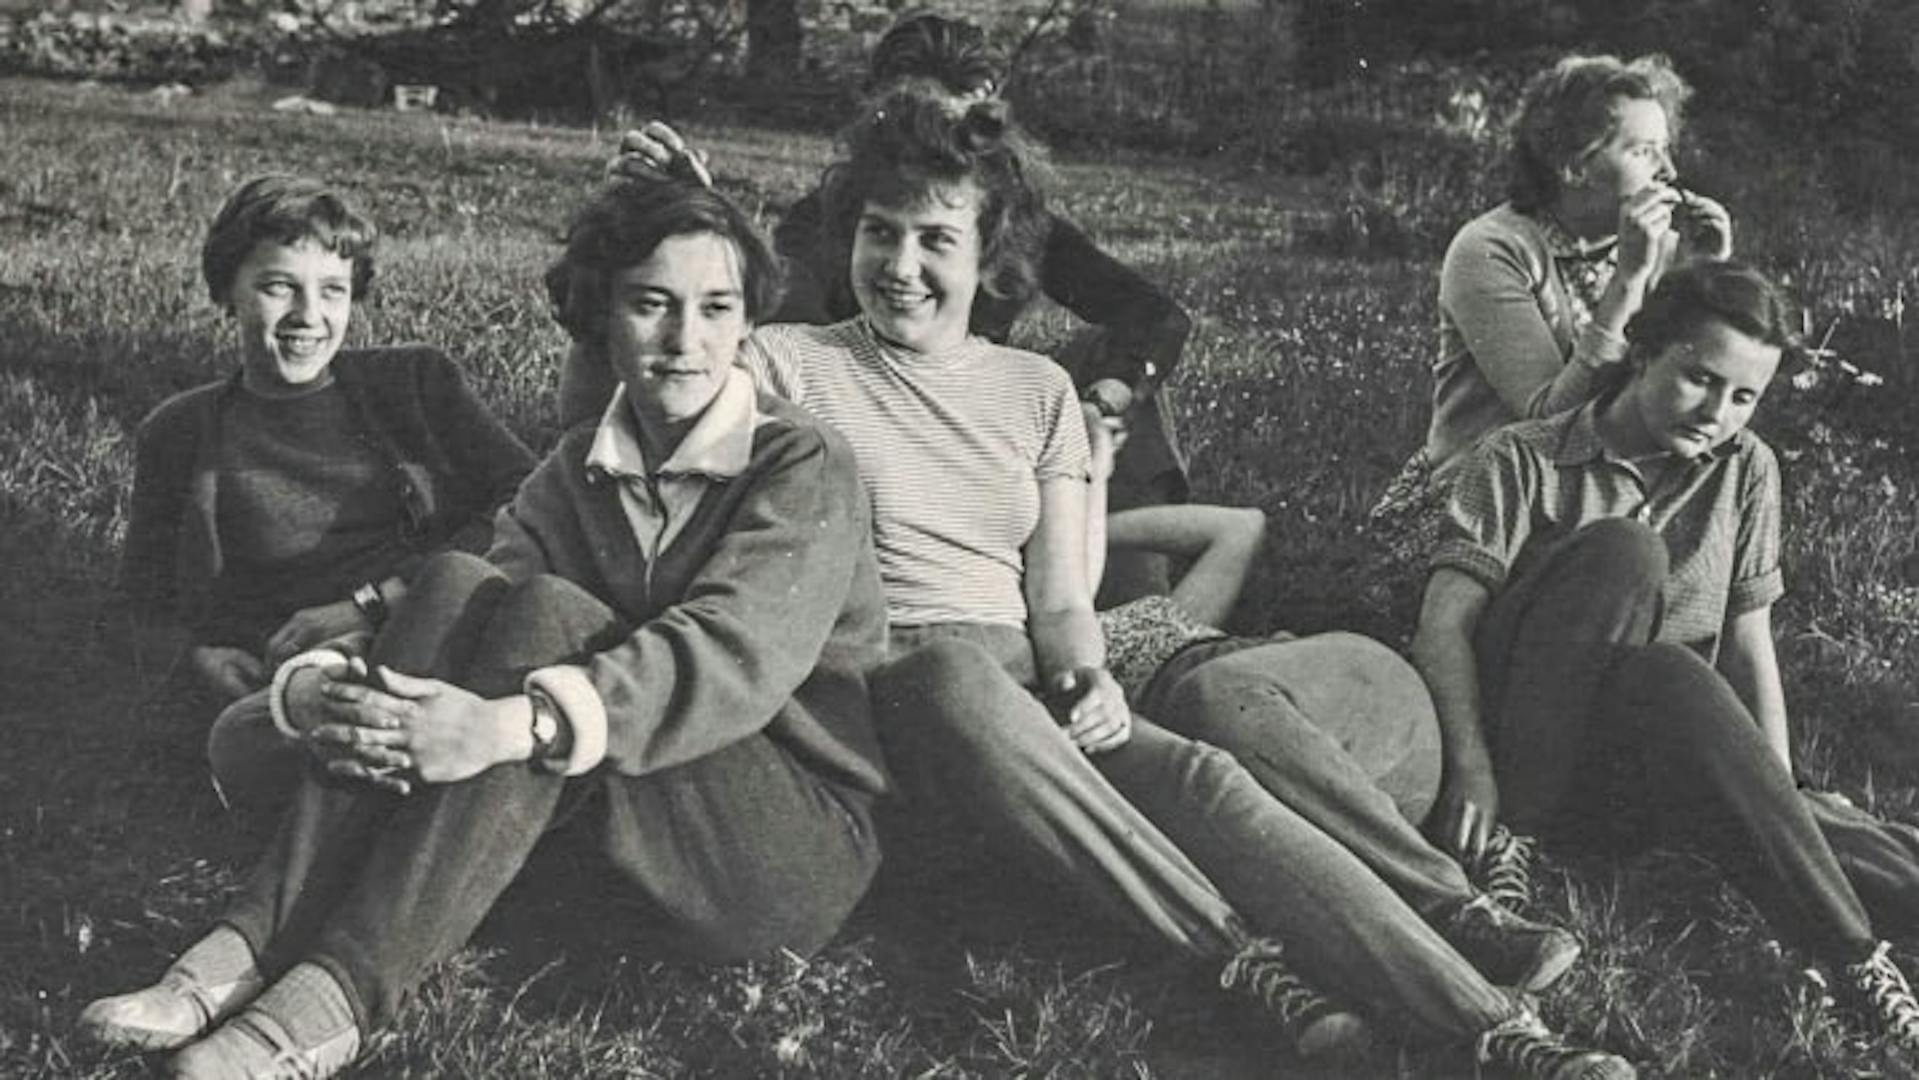 Young women having fun at finishing school in the 1960s.